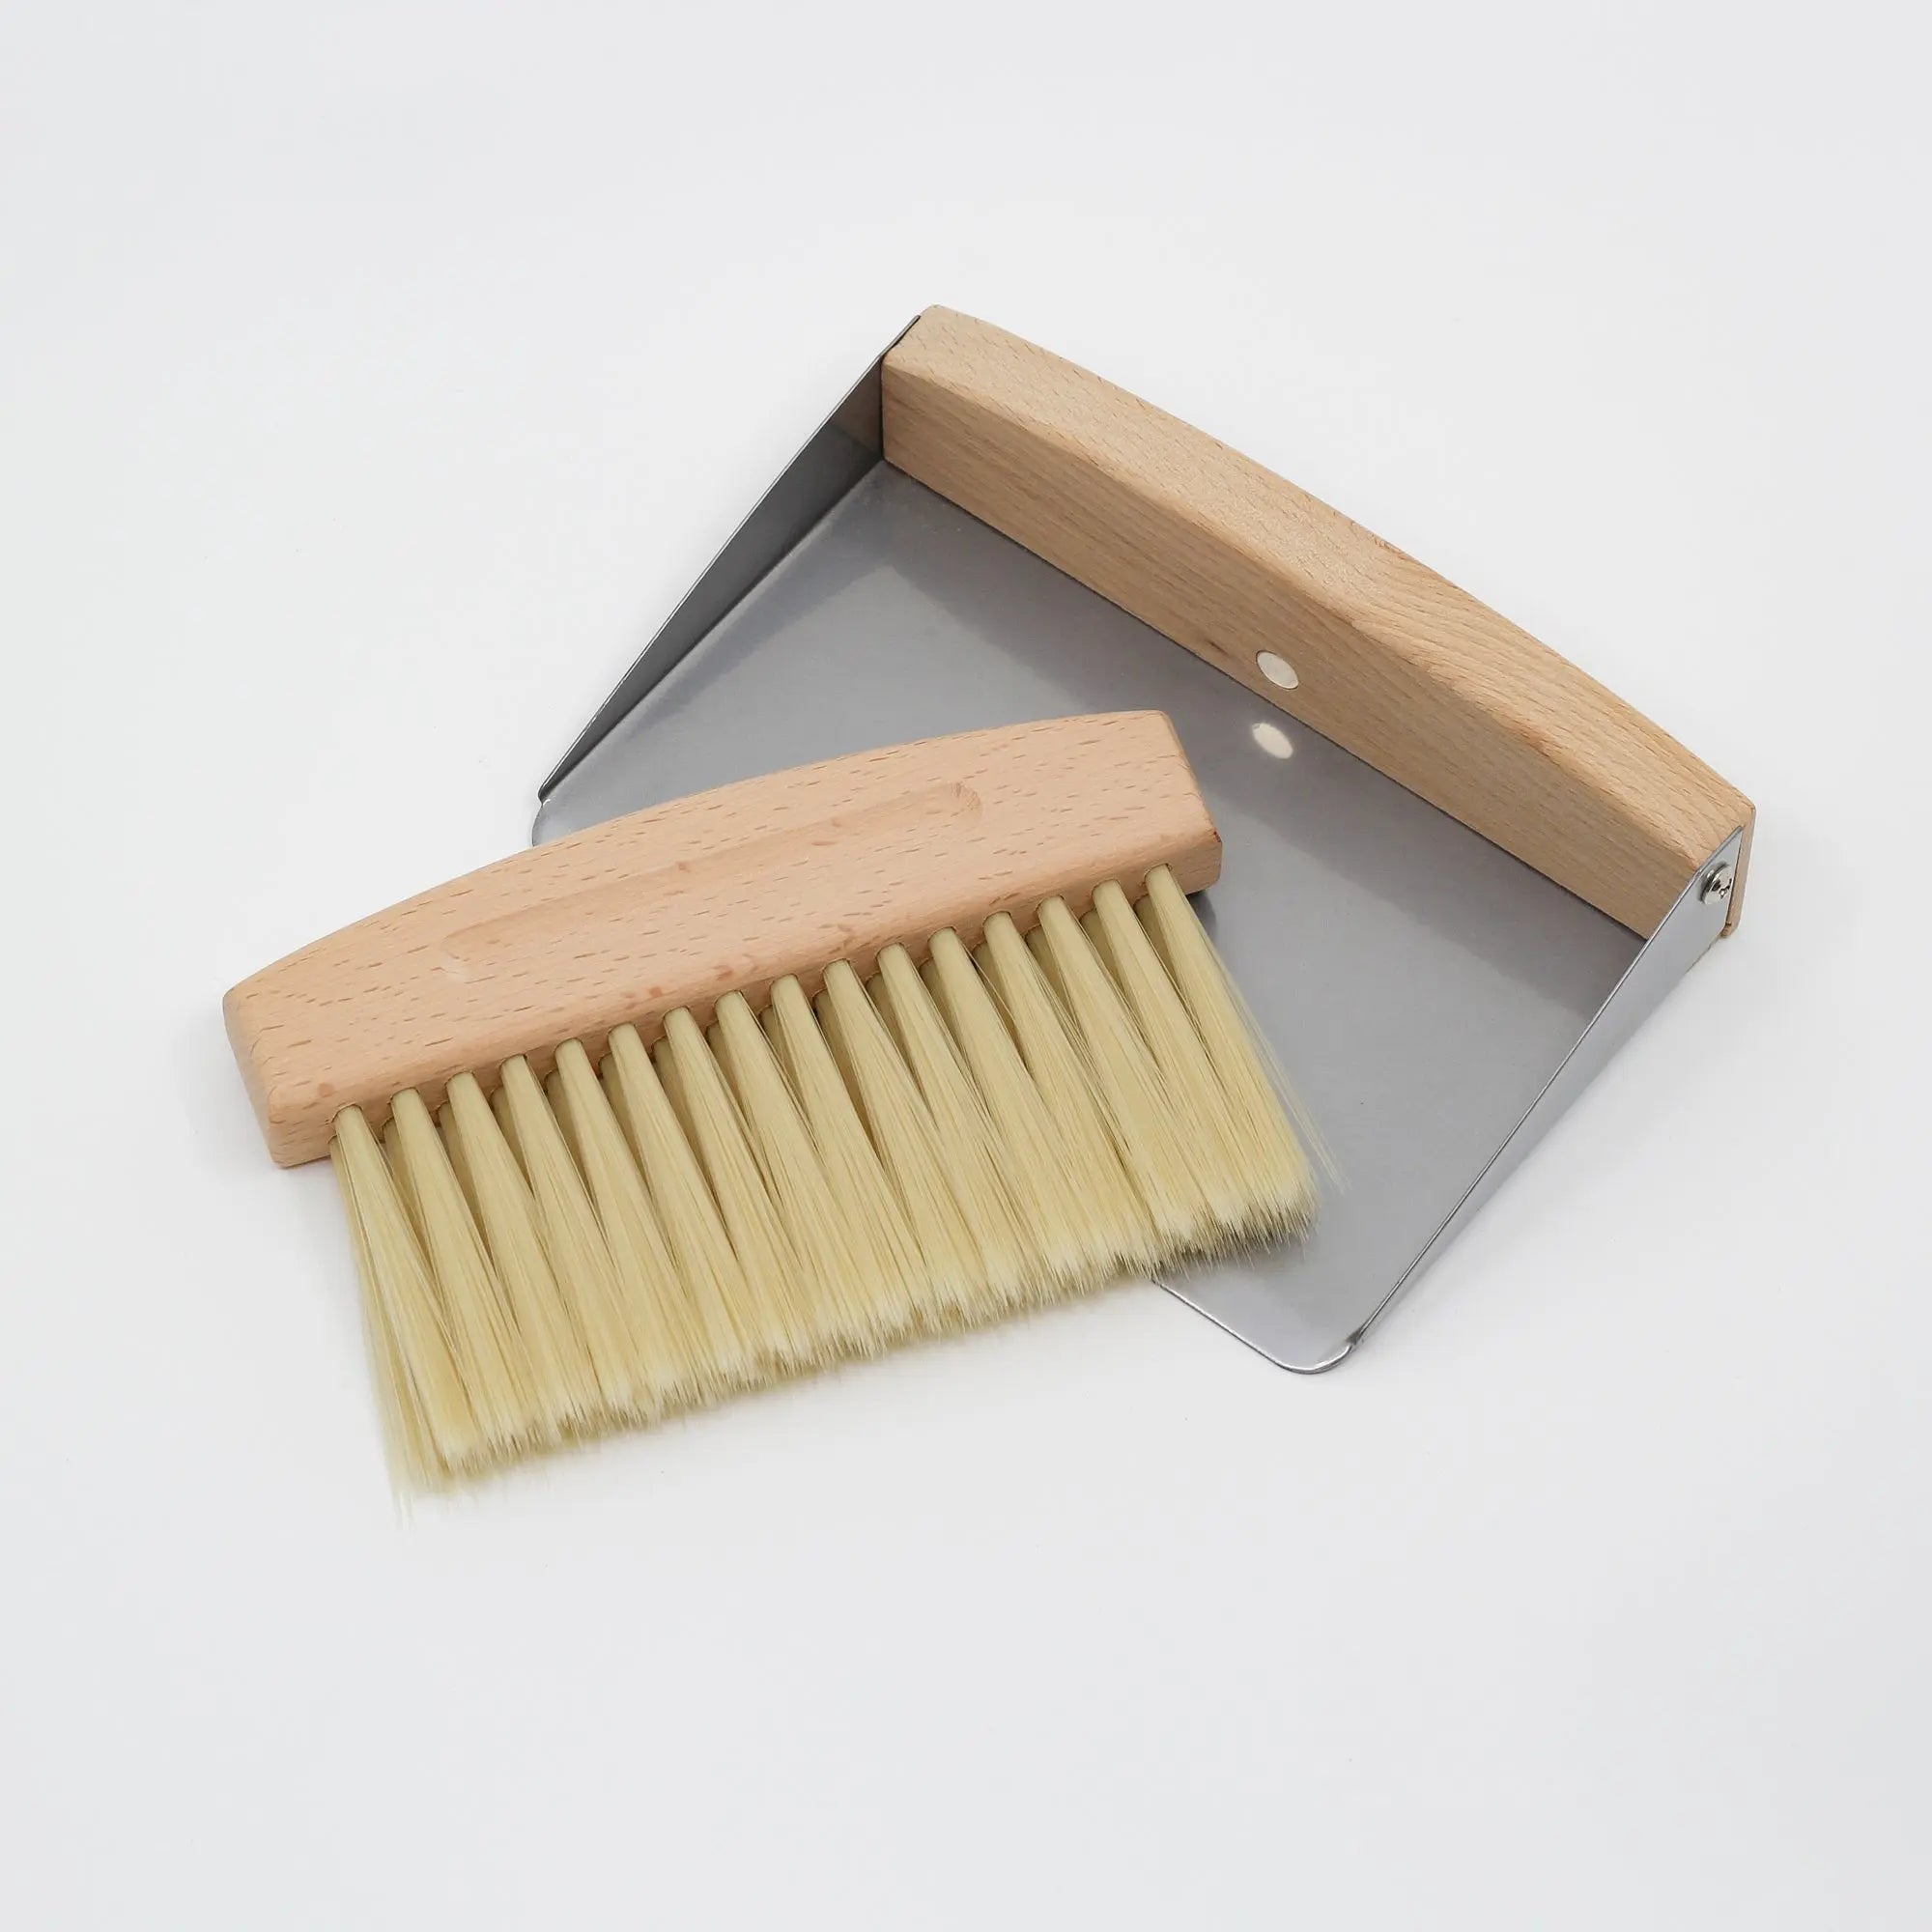 Table dustpan and brush - SMUKHI